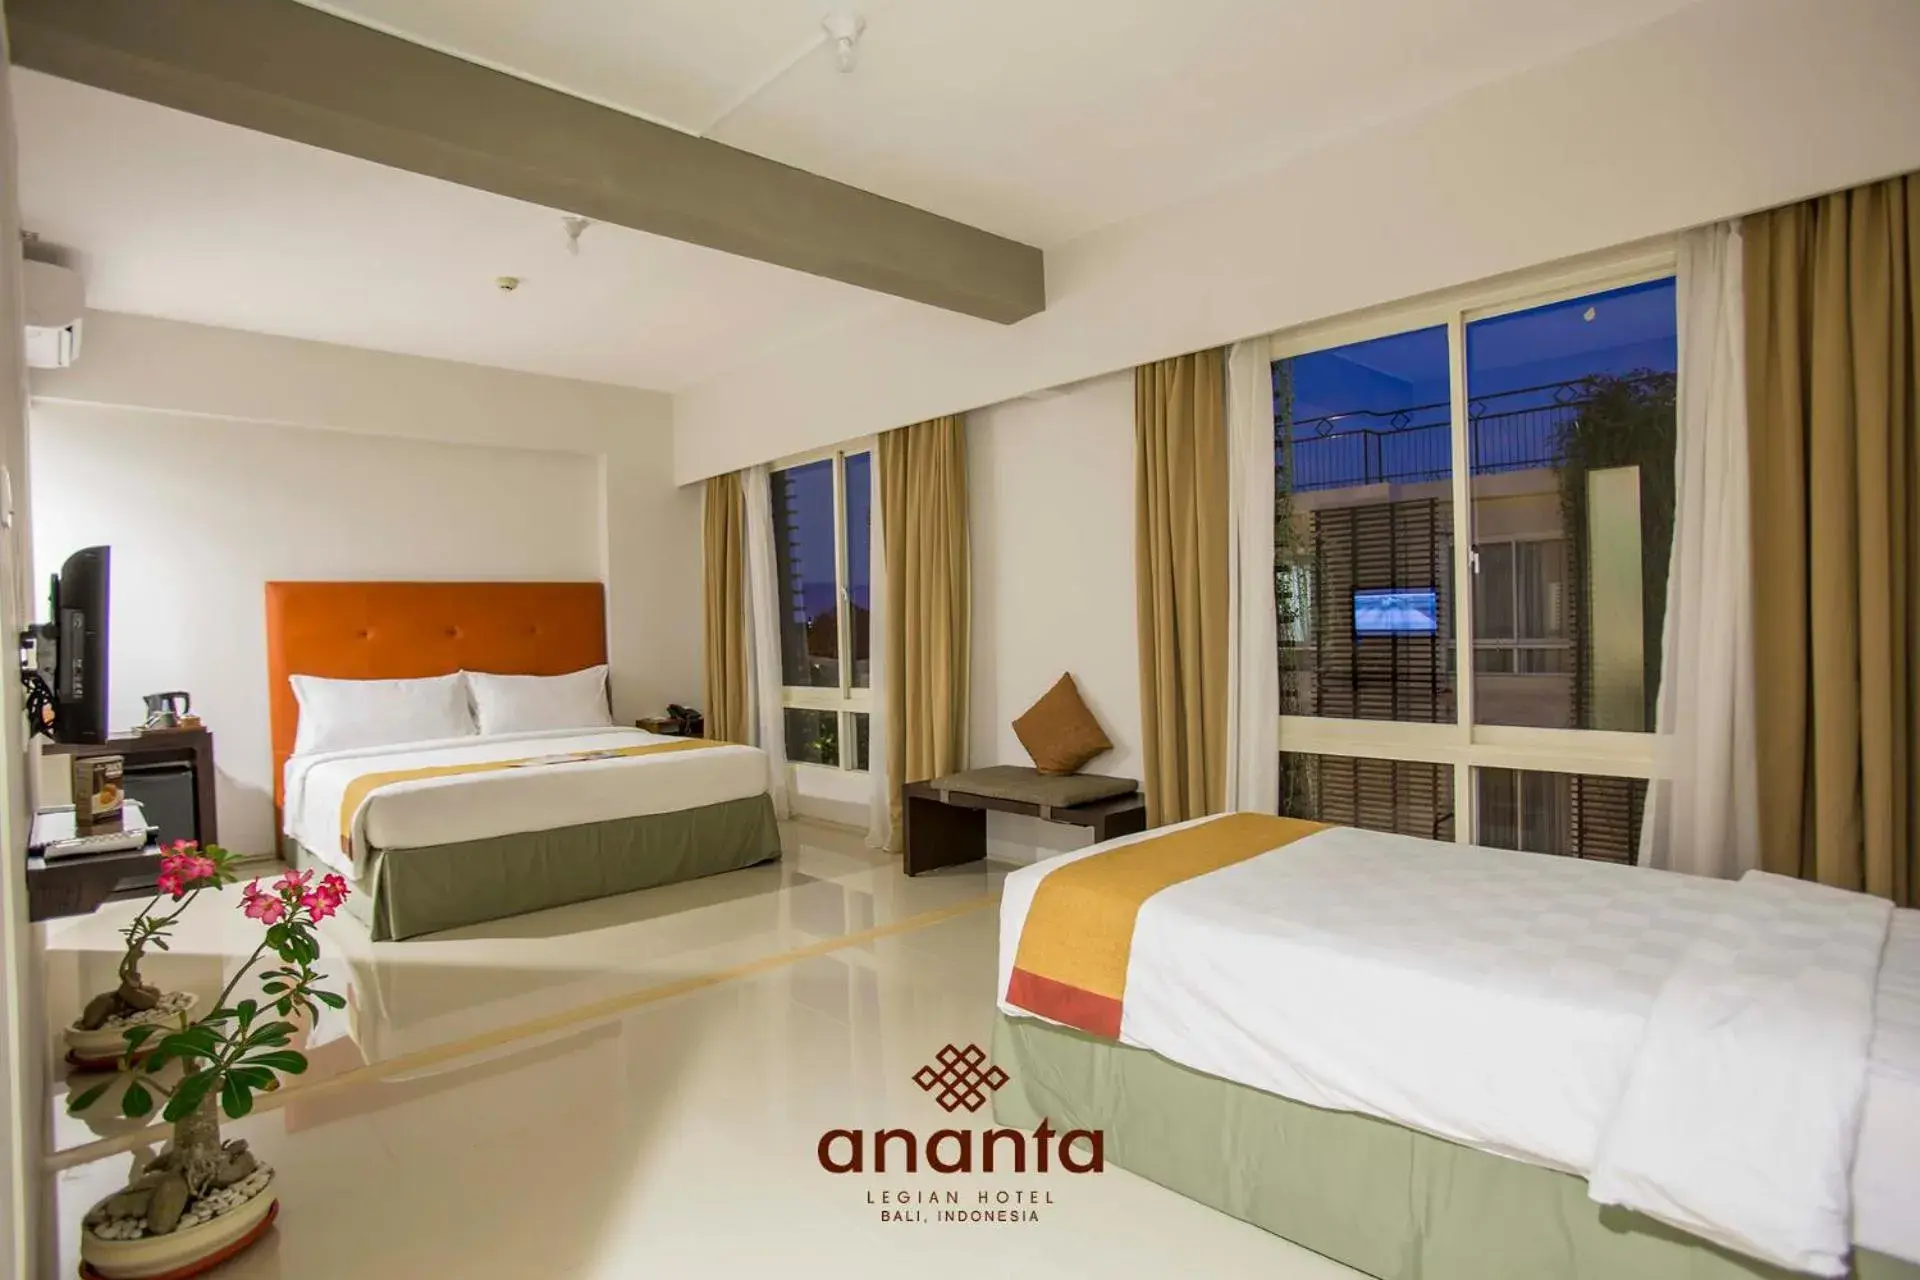 Bed in Ananta Legian Hotel